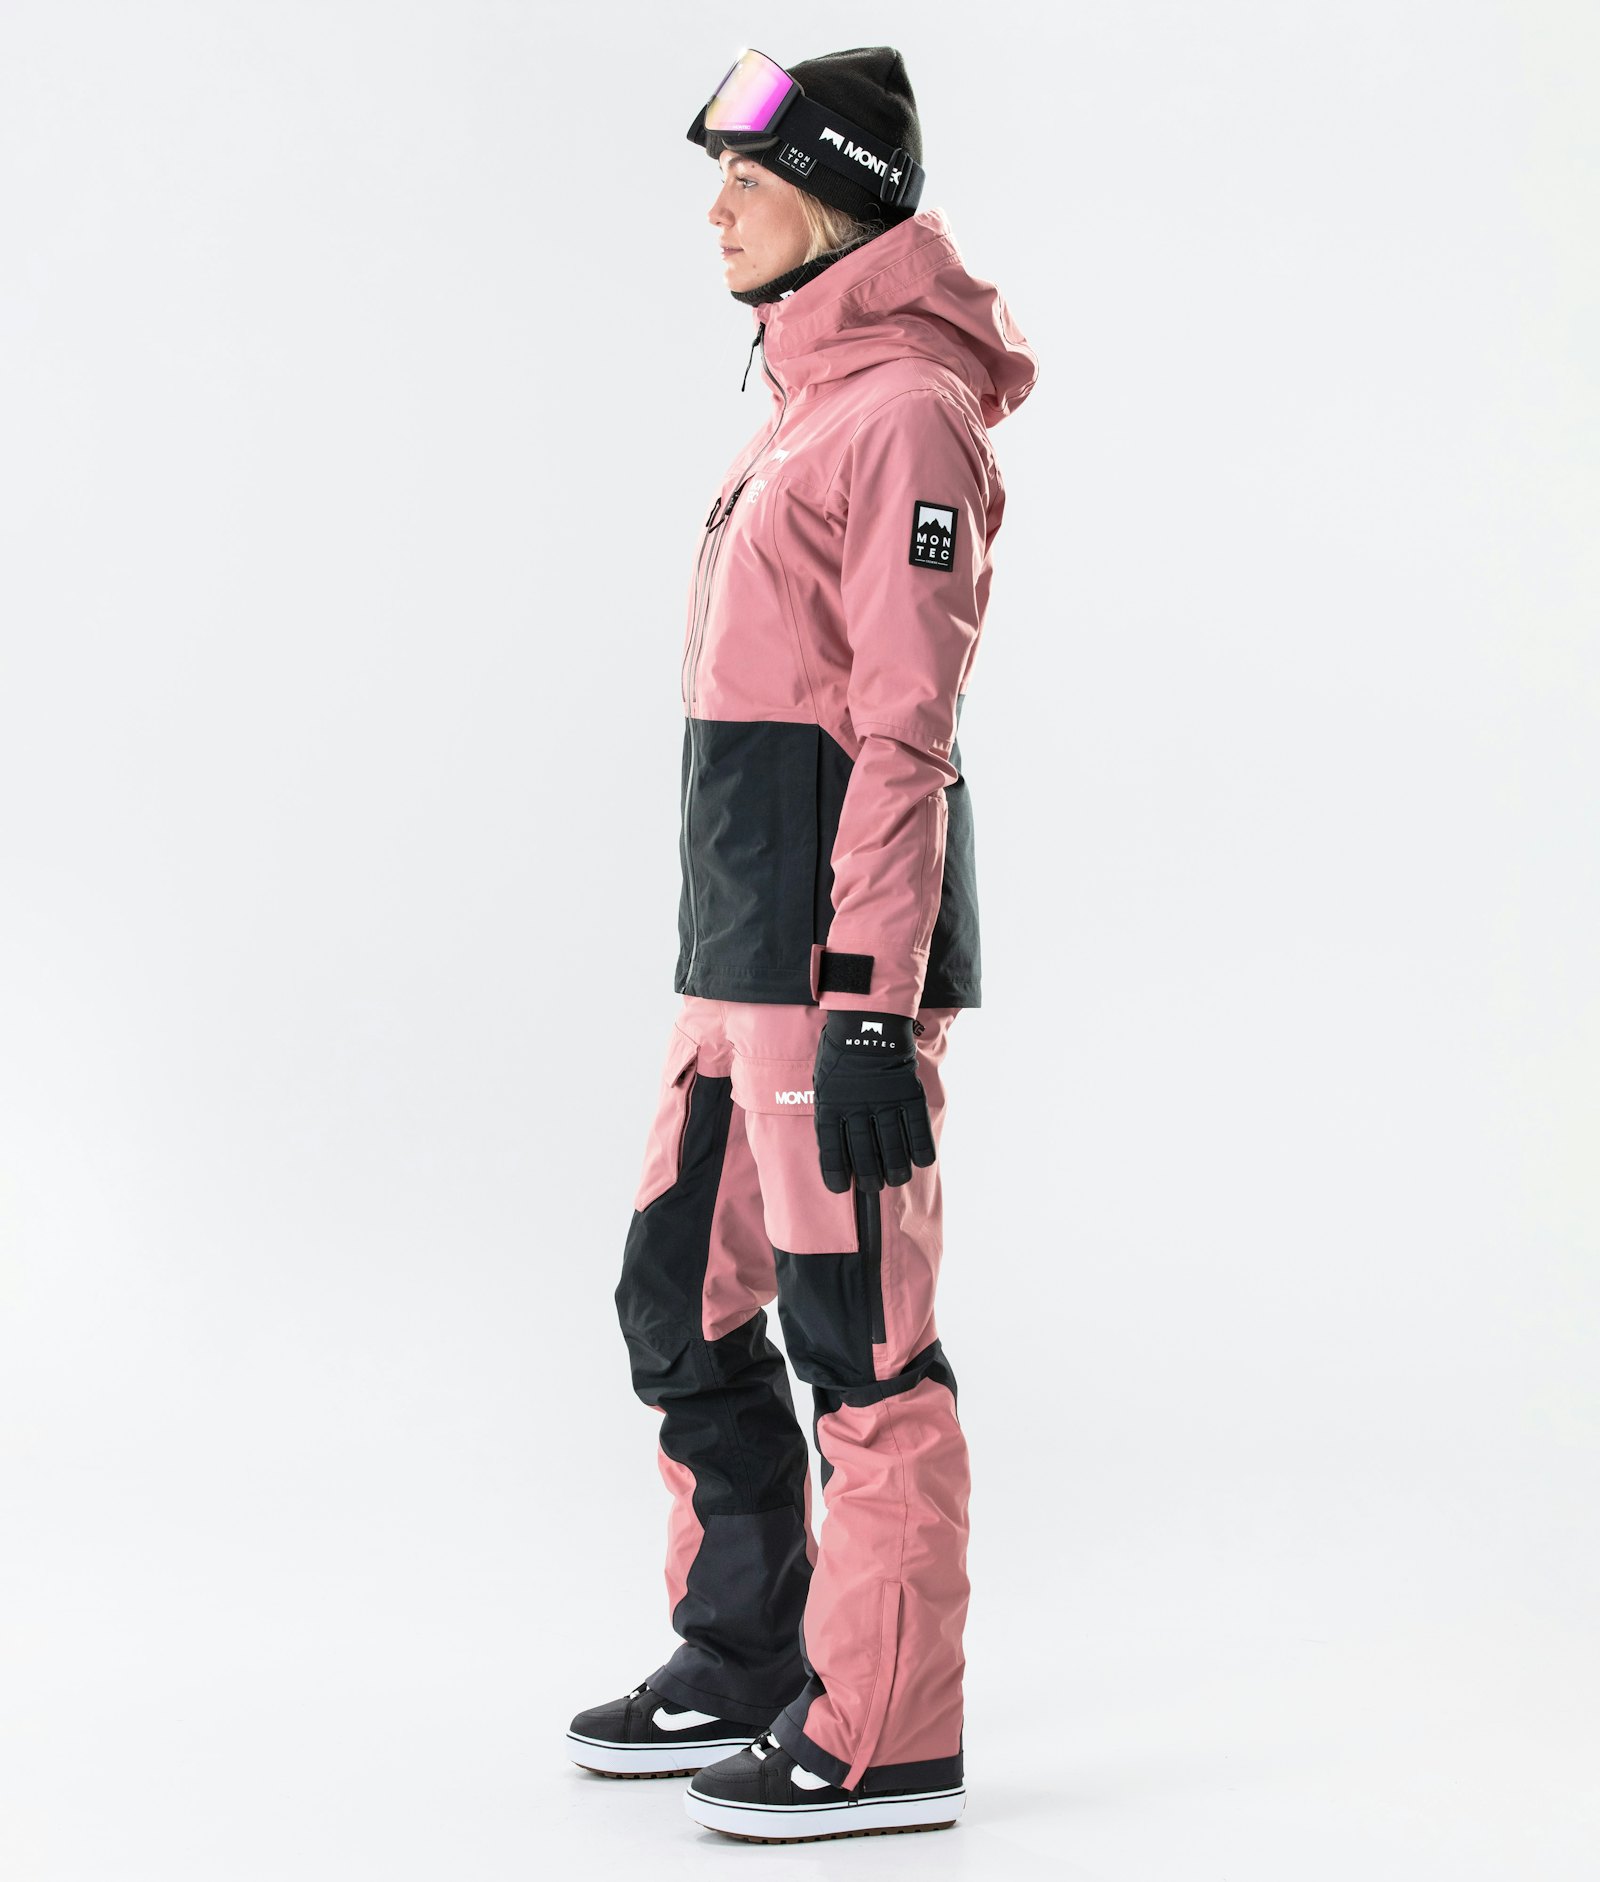 Moss W 2020 Snowboardjacka Dam Pink/Black